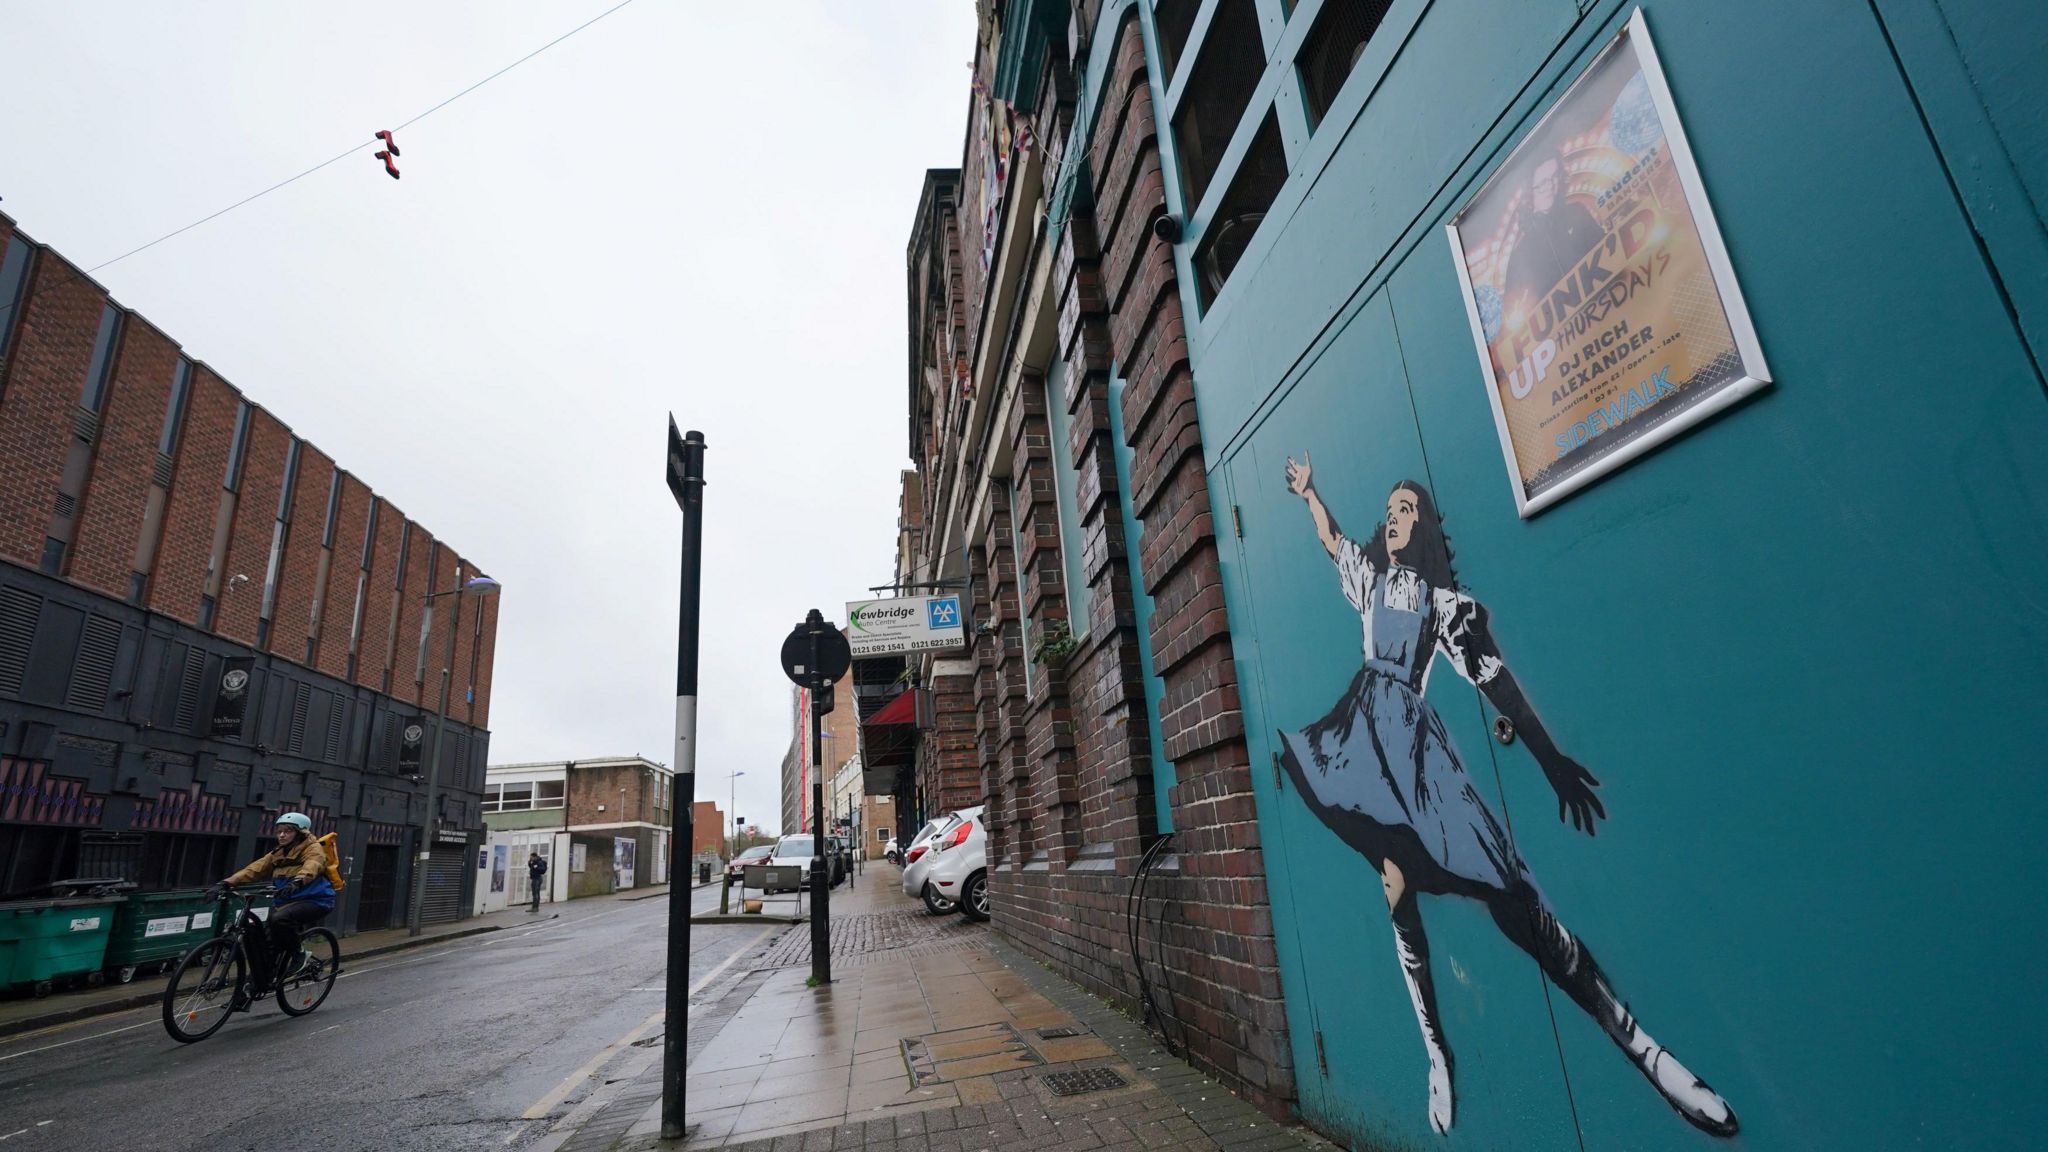 The mural in Birmingham